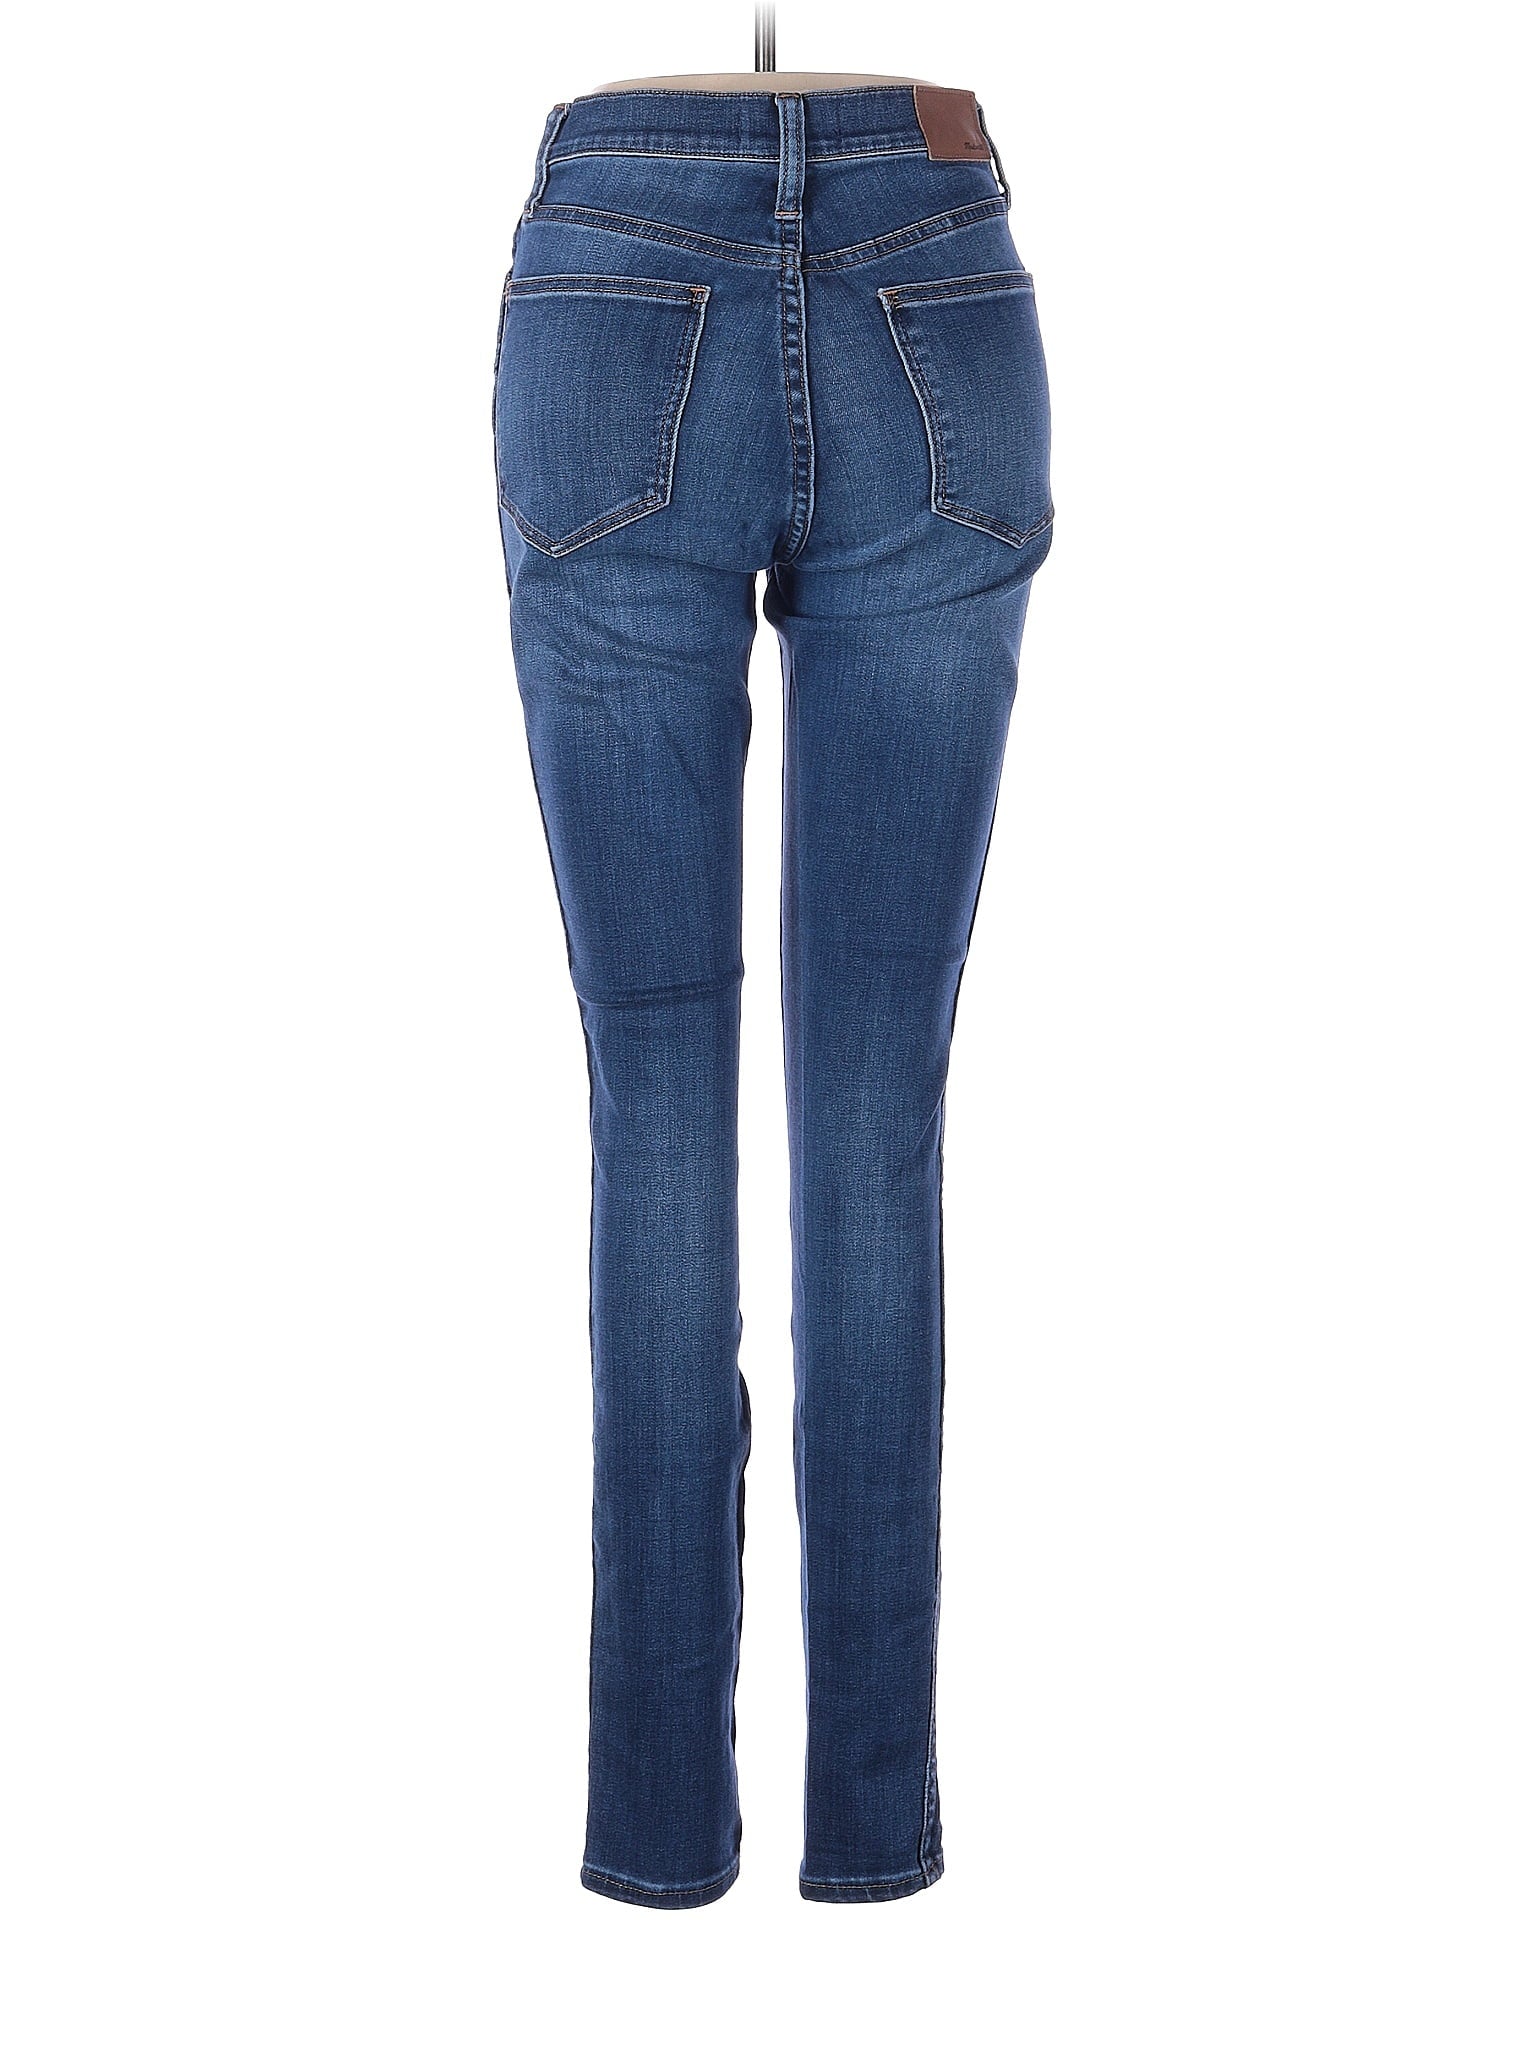 Mid-Rise Boyjeans Jeans in Dark Wash waist size - 29 T